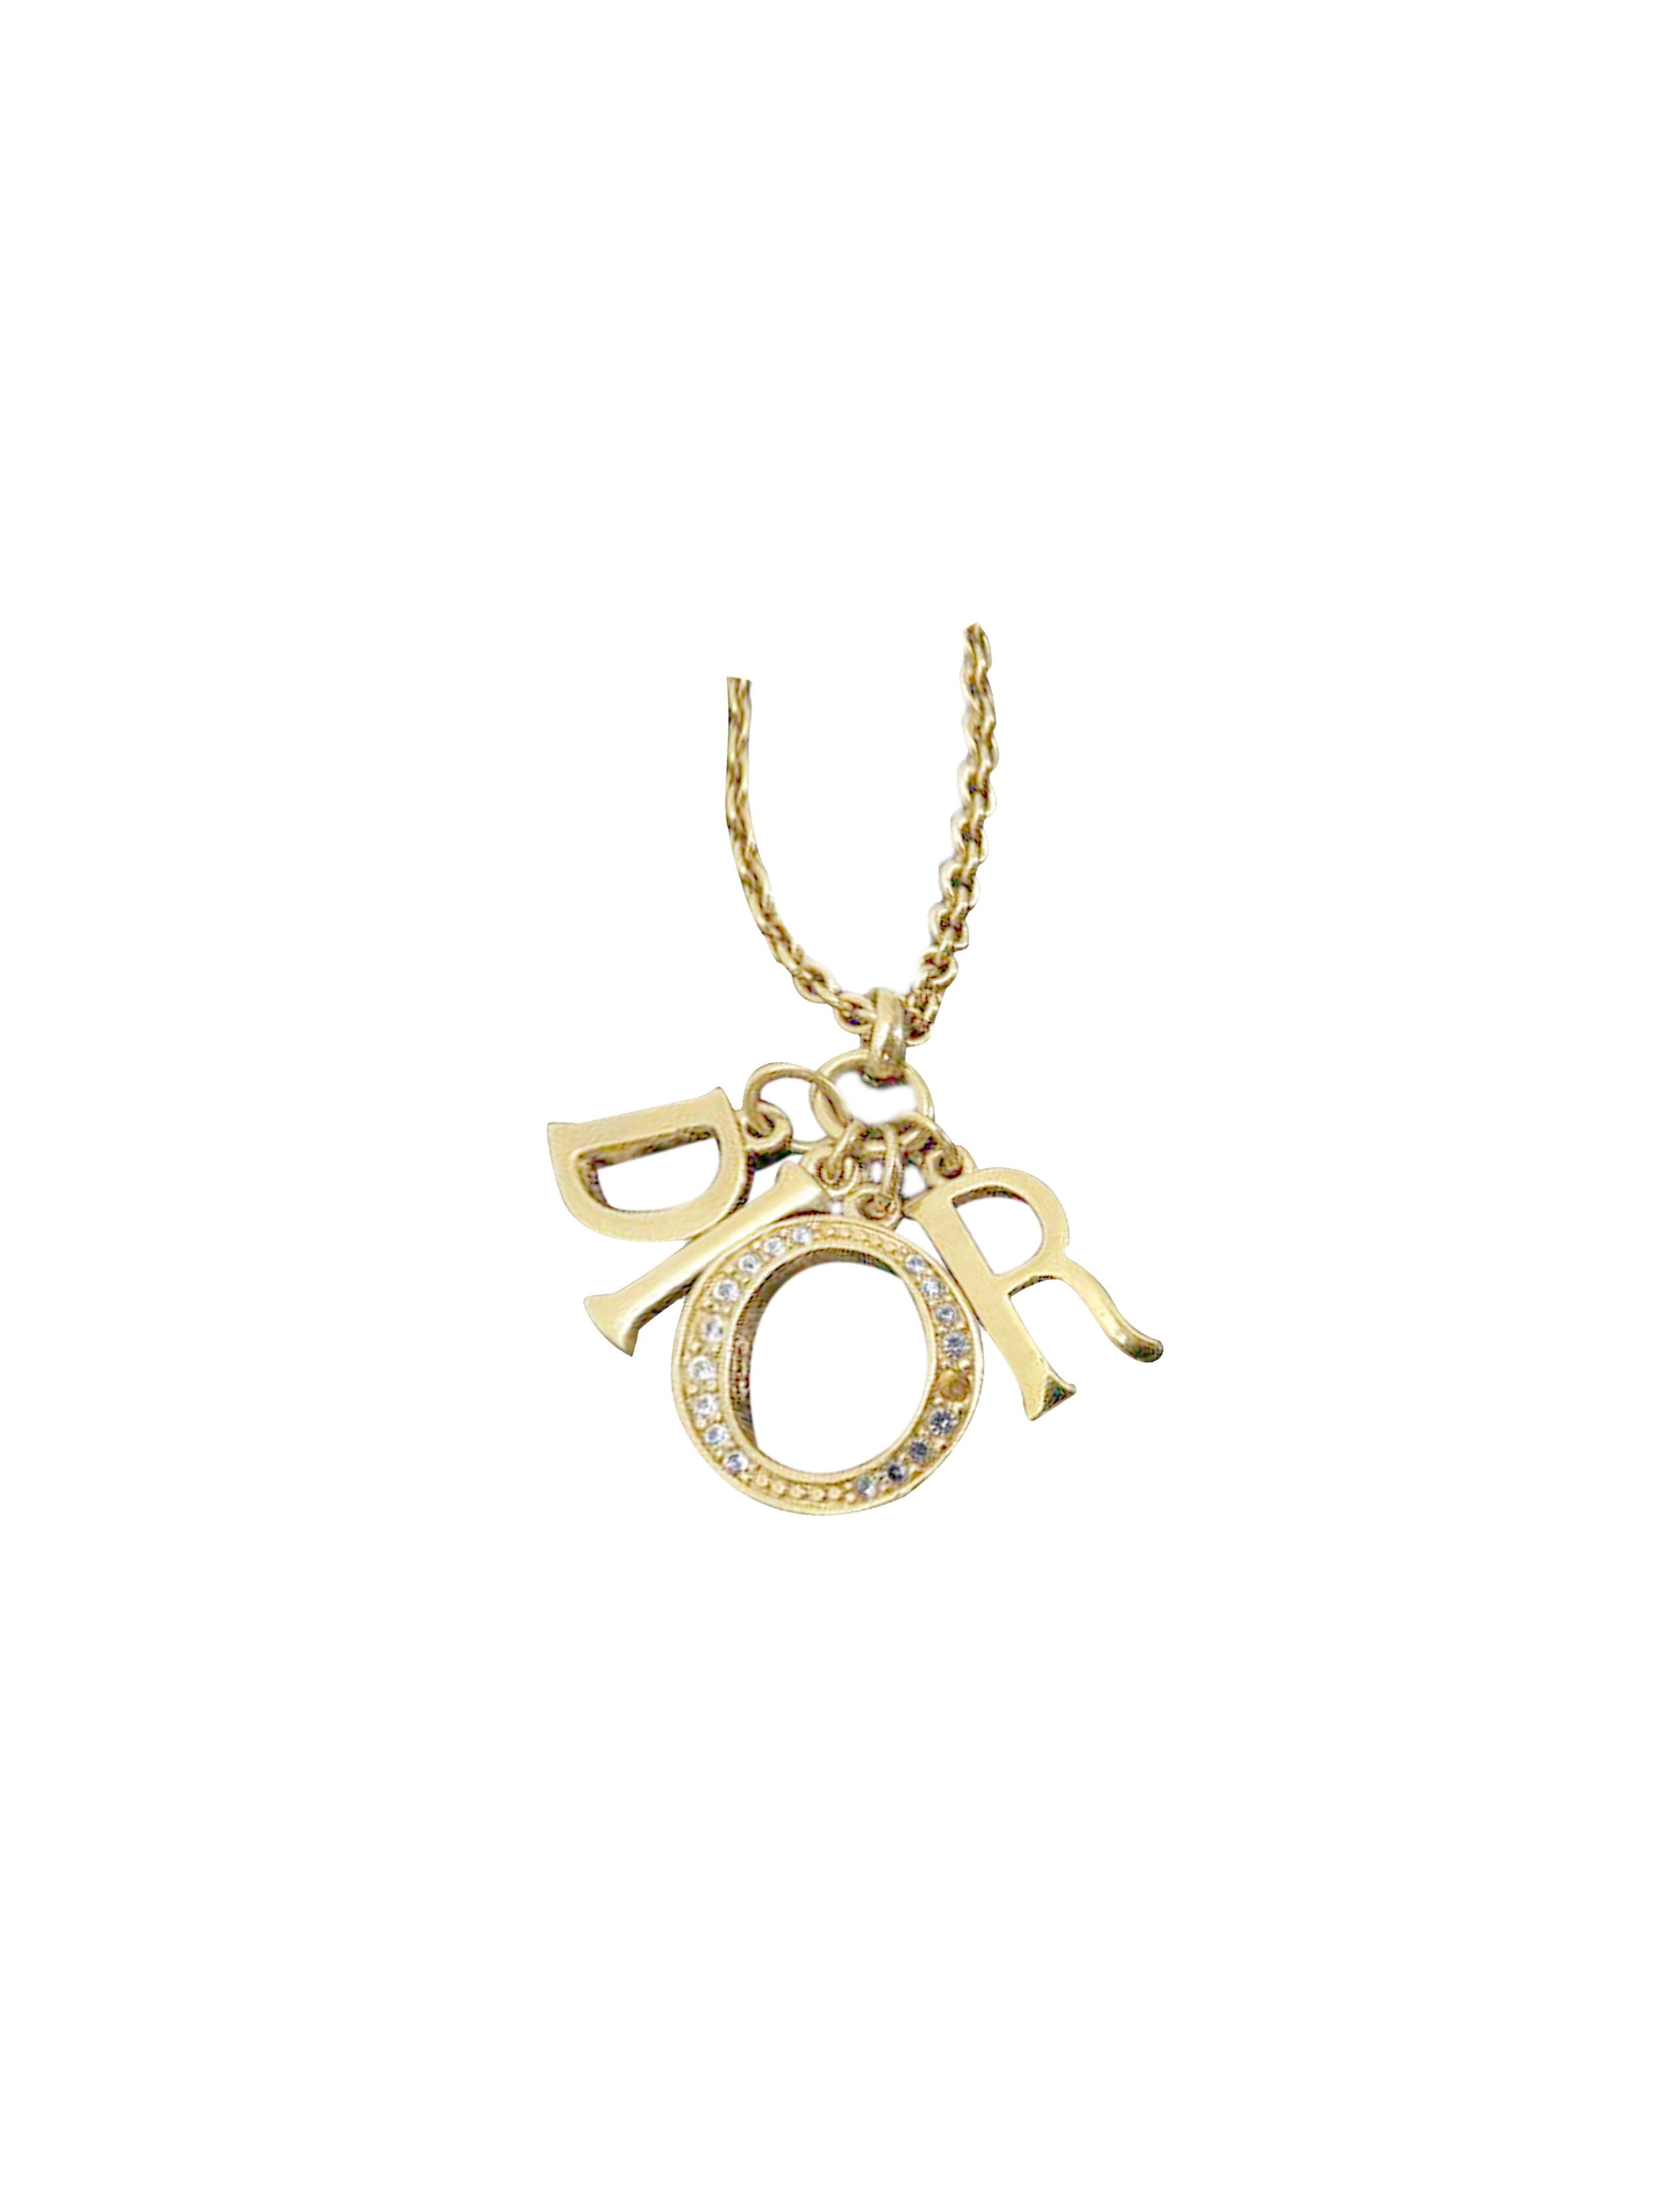 Christian Dior Authentic Logo Chain Necklace Pendant Gold Tone Accessory  45.5cm | eBay